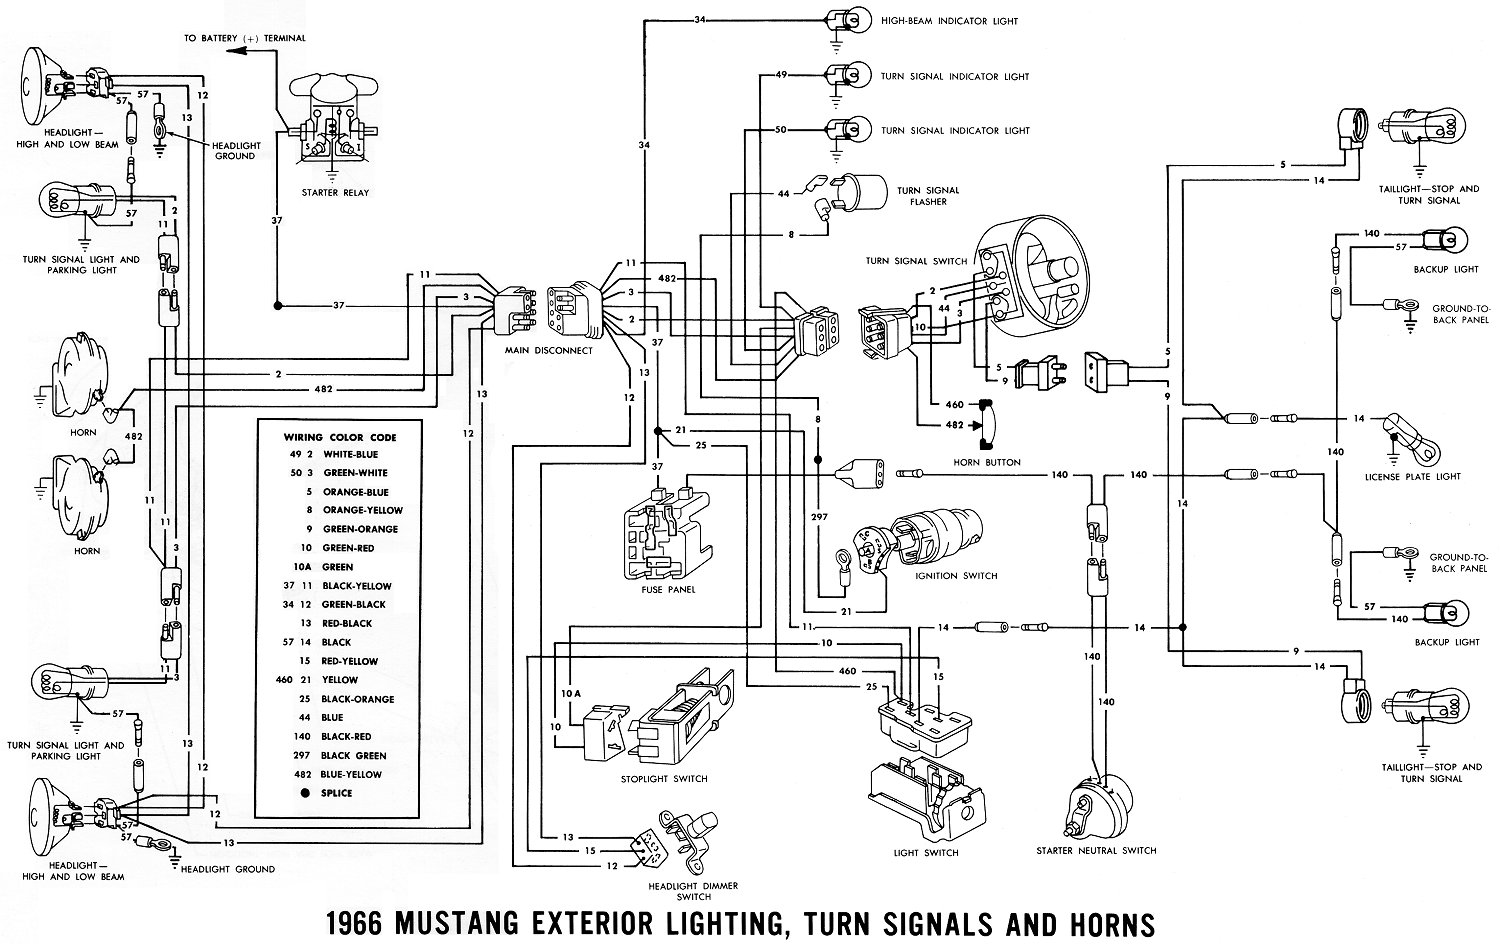 Vintage Mustang Wiring Diagrams  1971 Mustang Headlight Wiring Diagram    midlife66.com